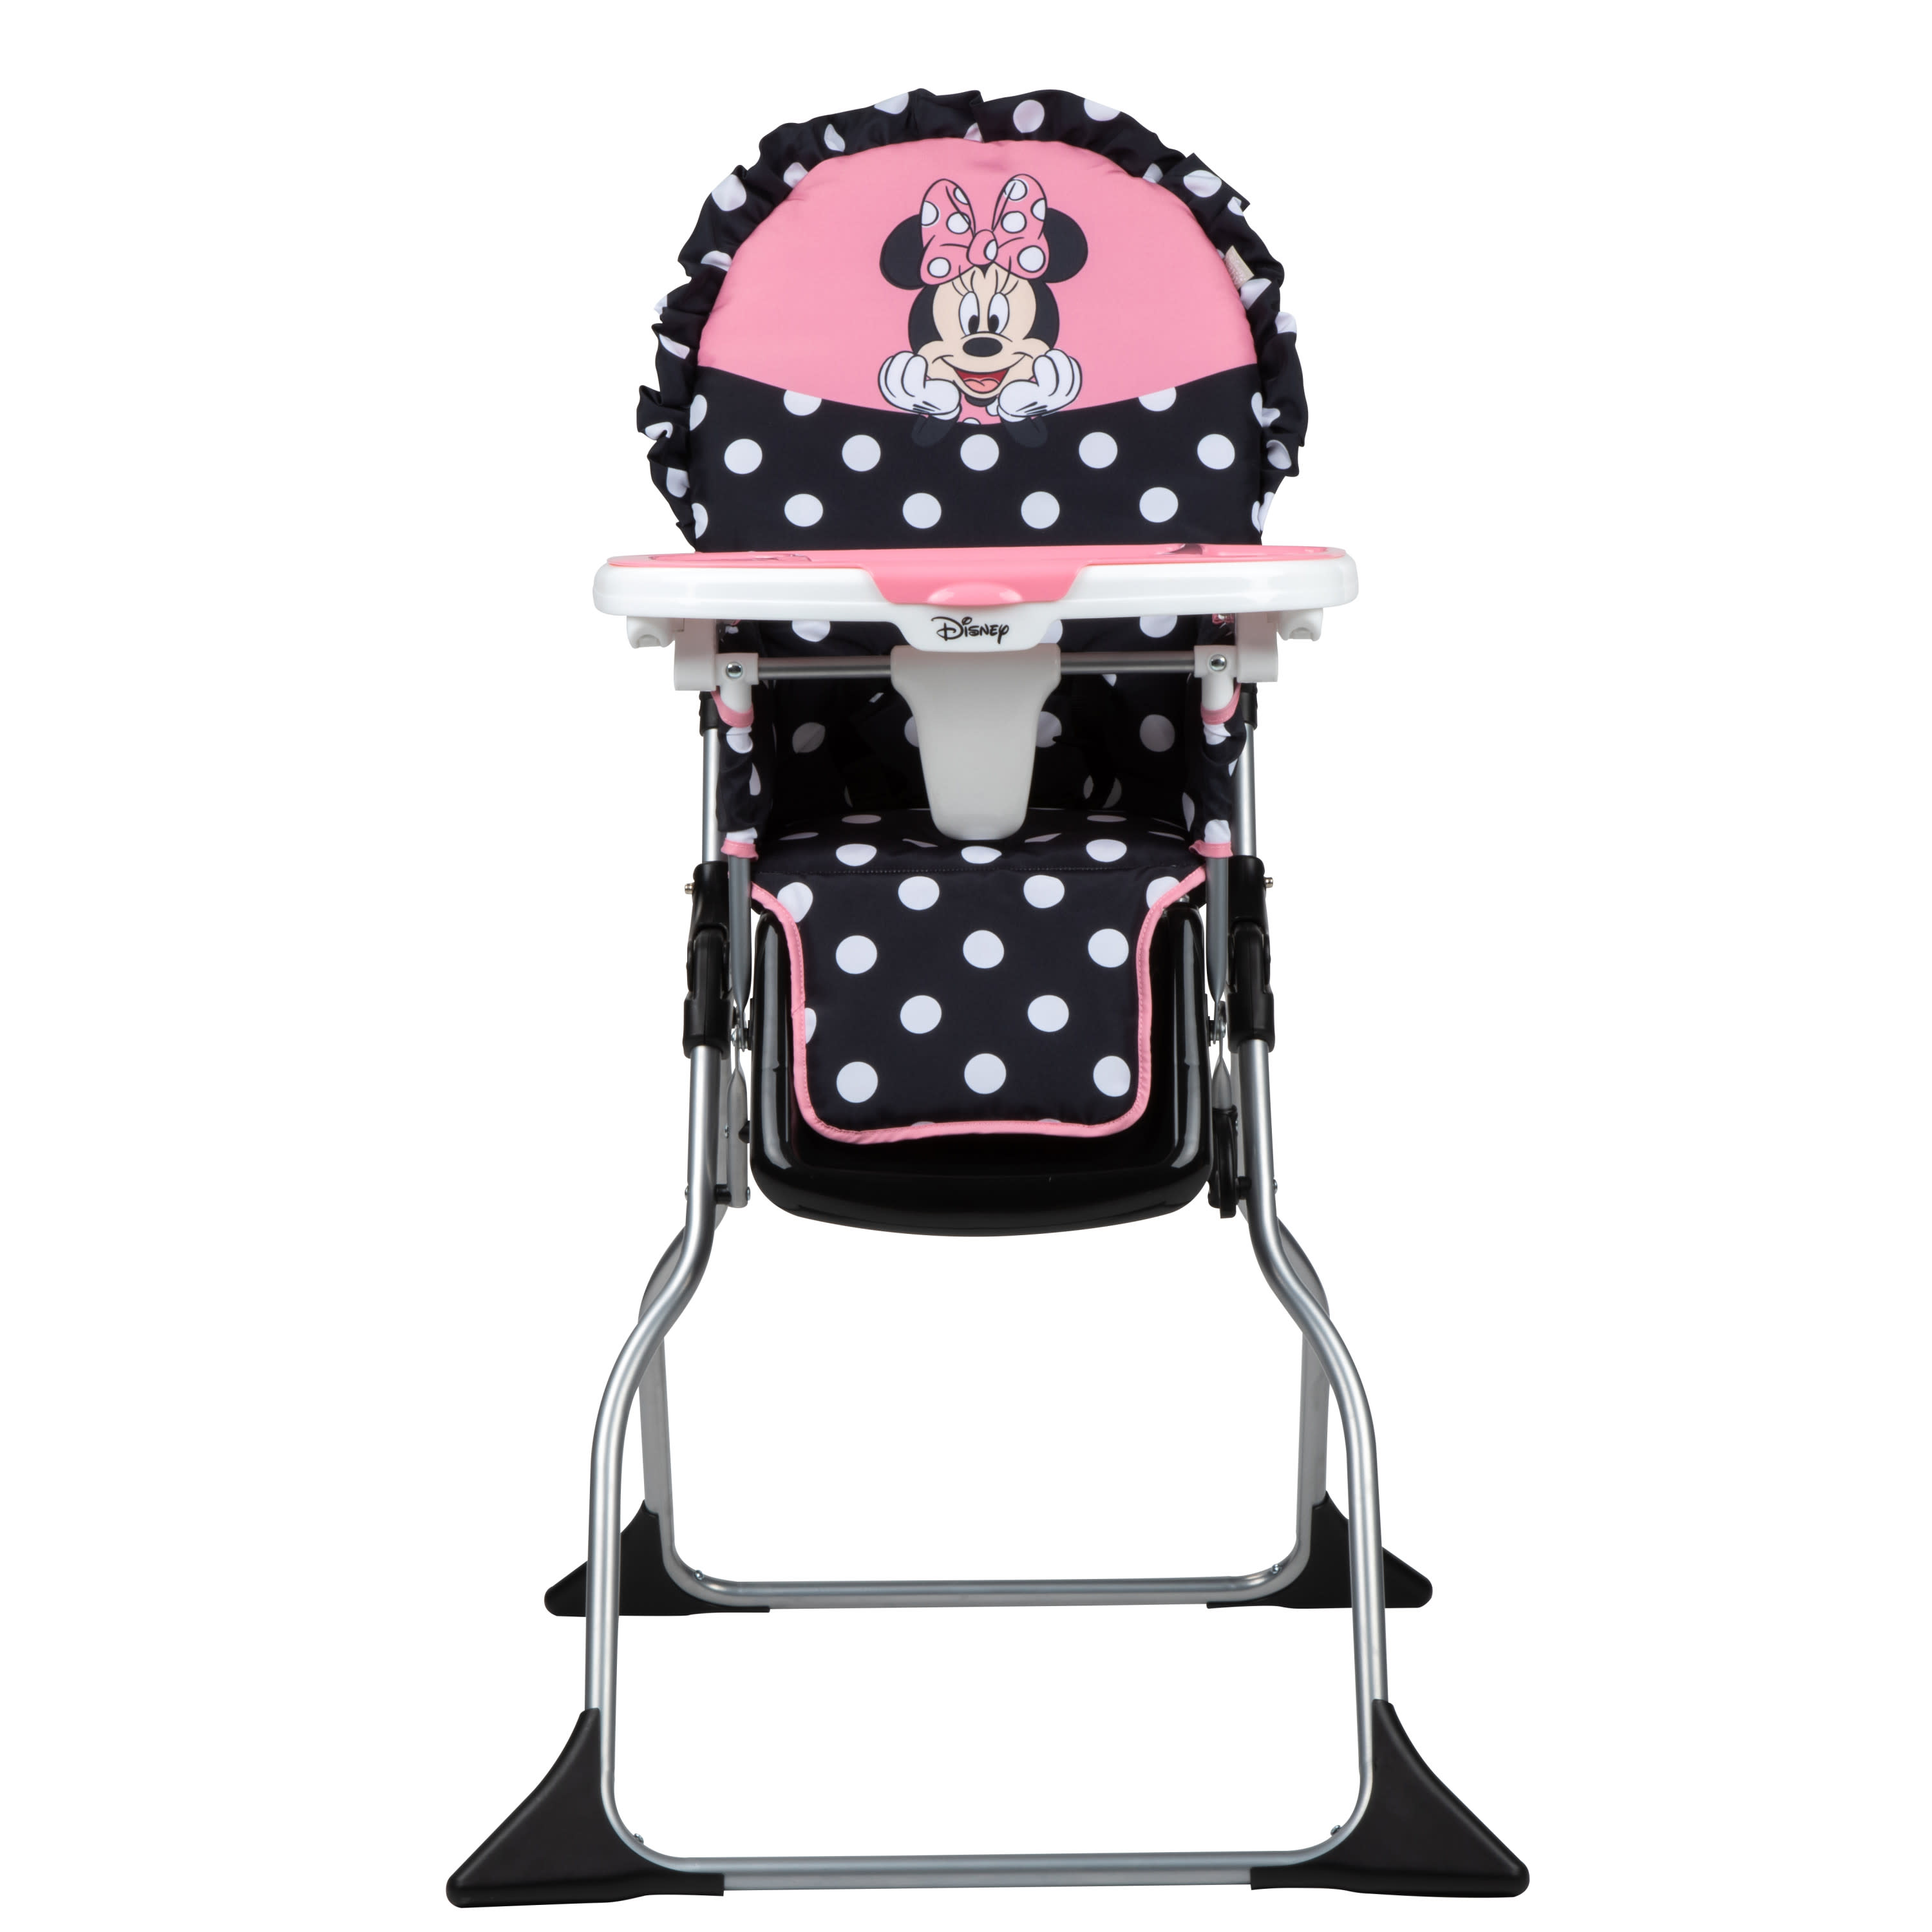 Disney Baby 3D Ultra Full Size High Chair, Peeking Minnie - image 12 of 16